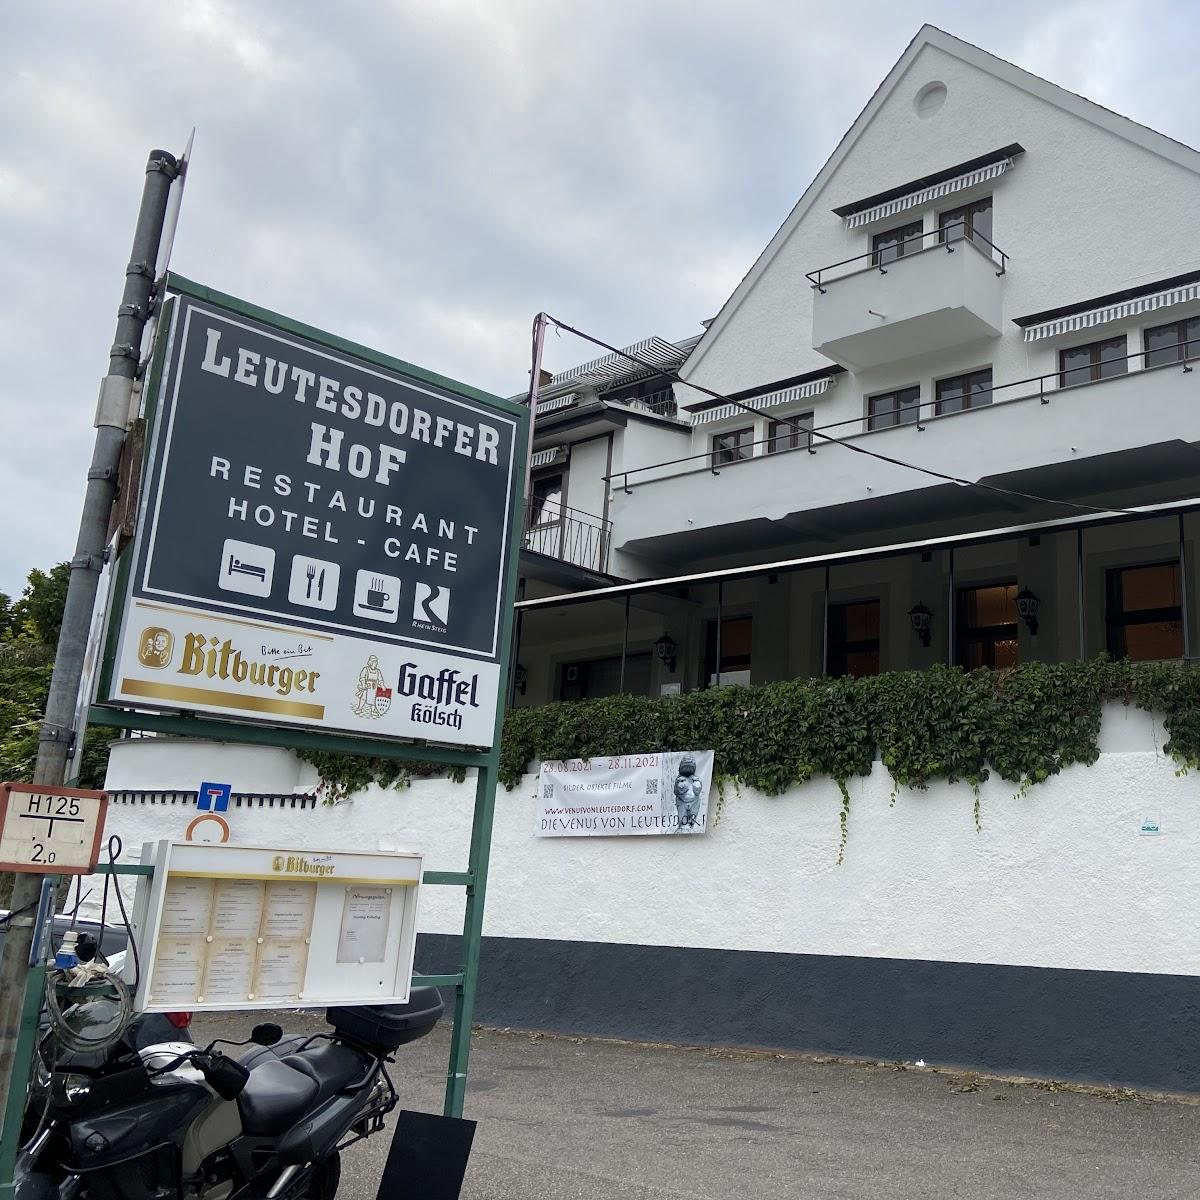 Restaurant "er Hof" in Leutesdorf